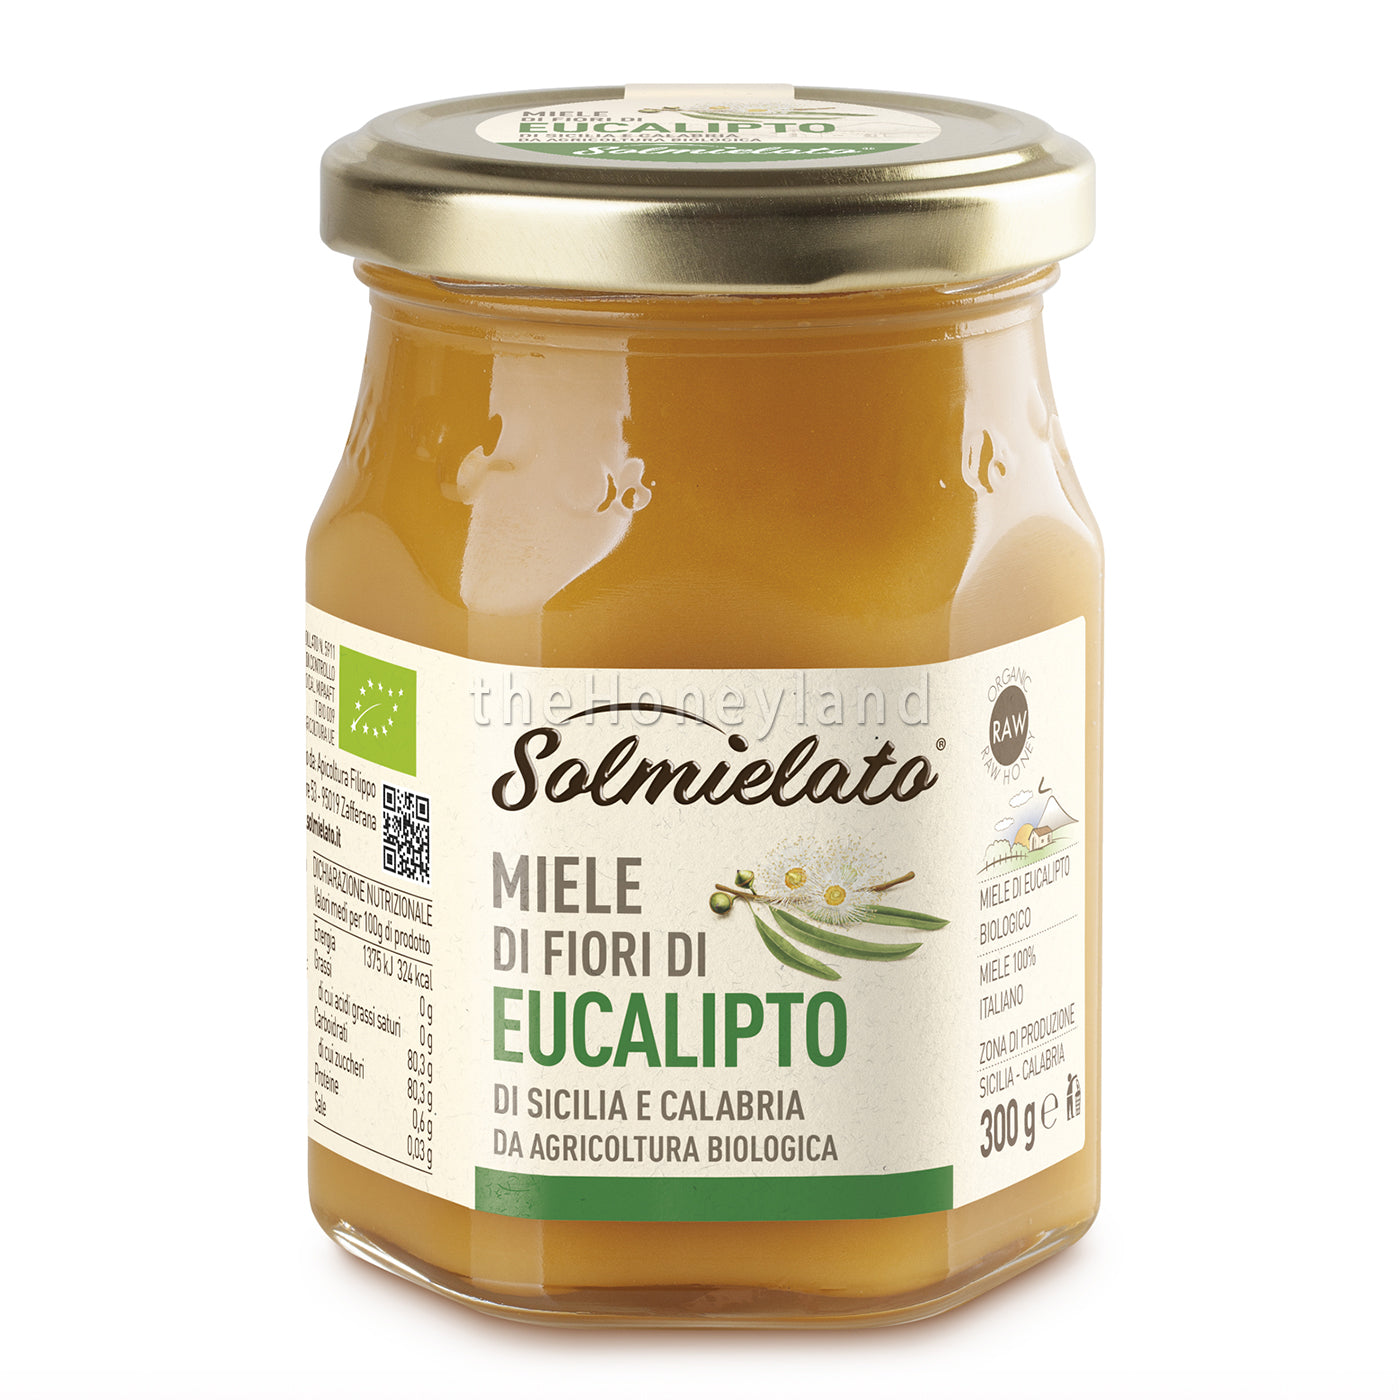 Eucalyptus Honey from the Calatino woods (Sicily)